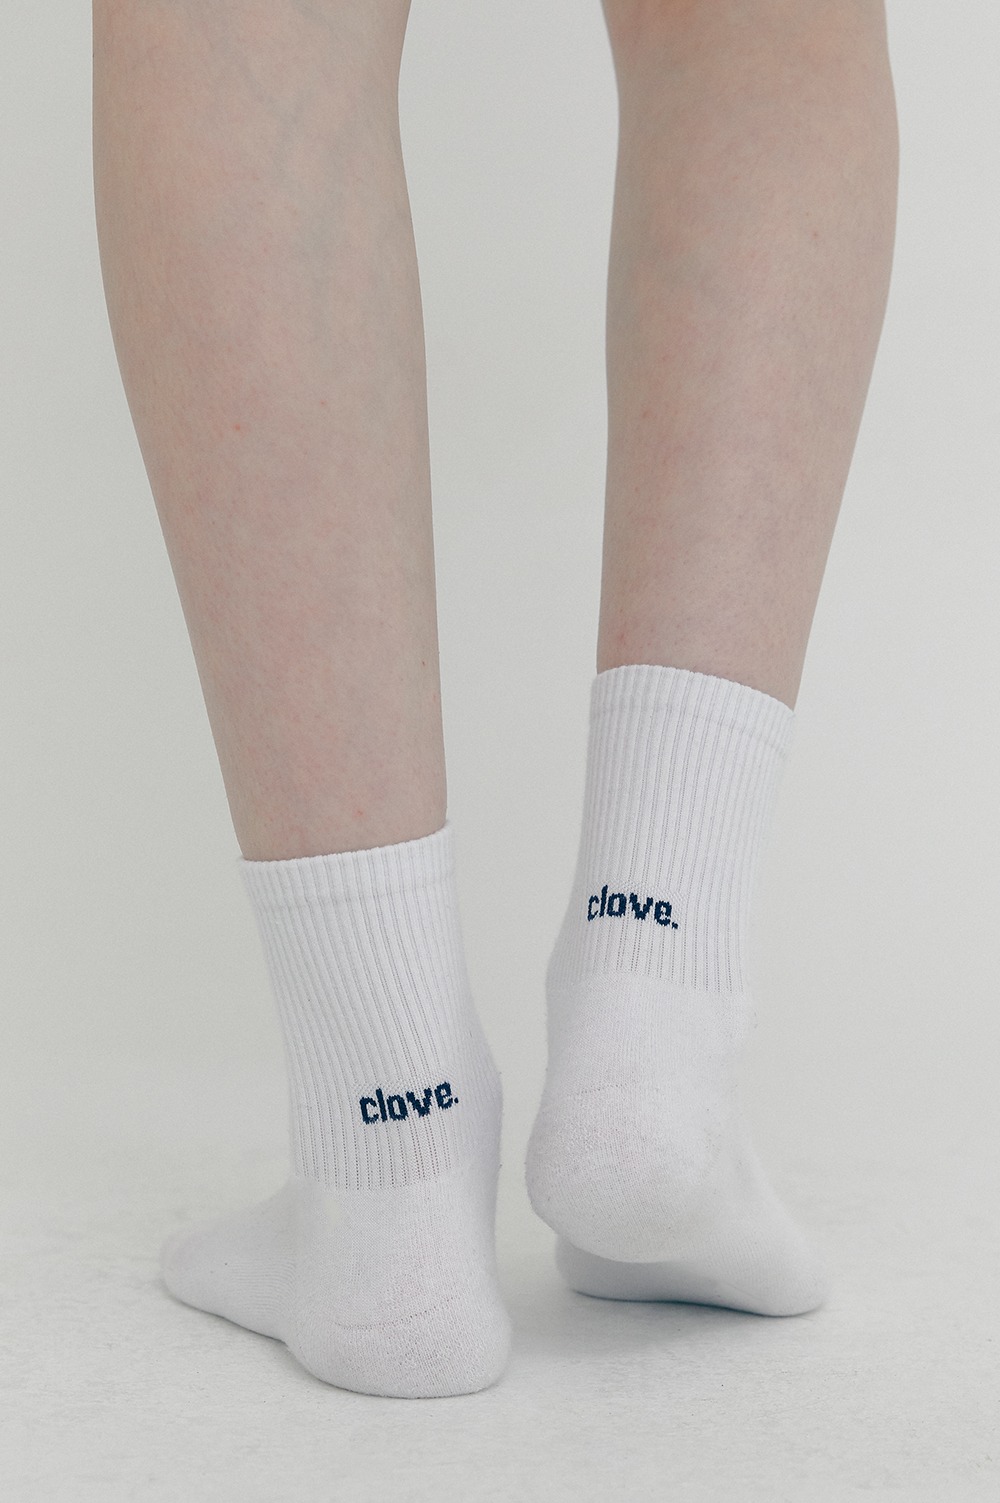 clove - Clove Coolmax Socks Navy (2pcs)